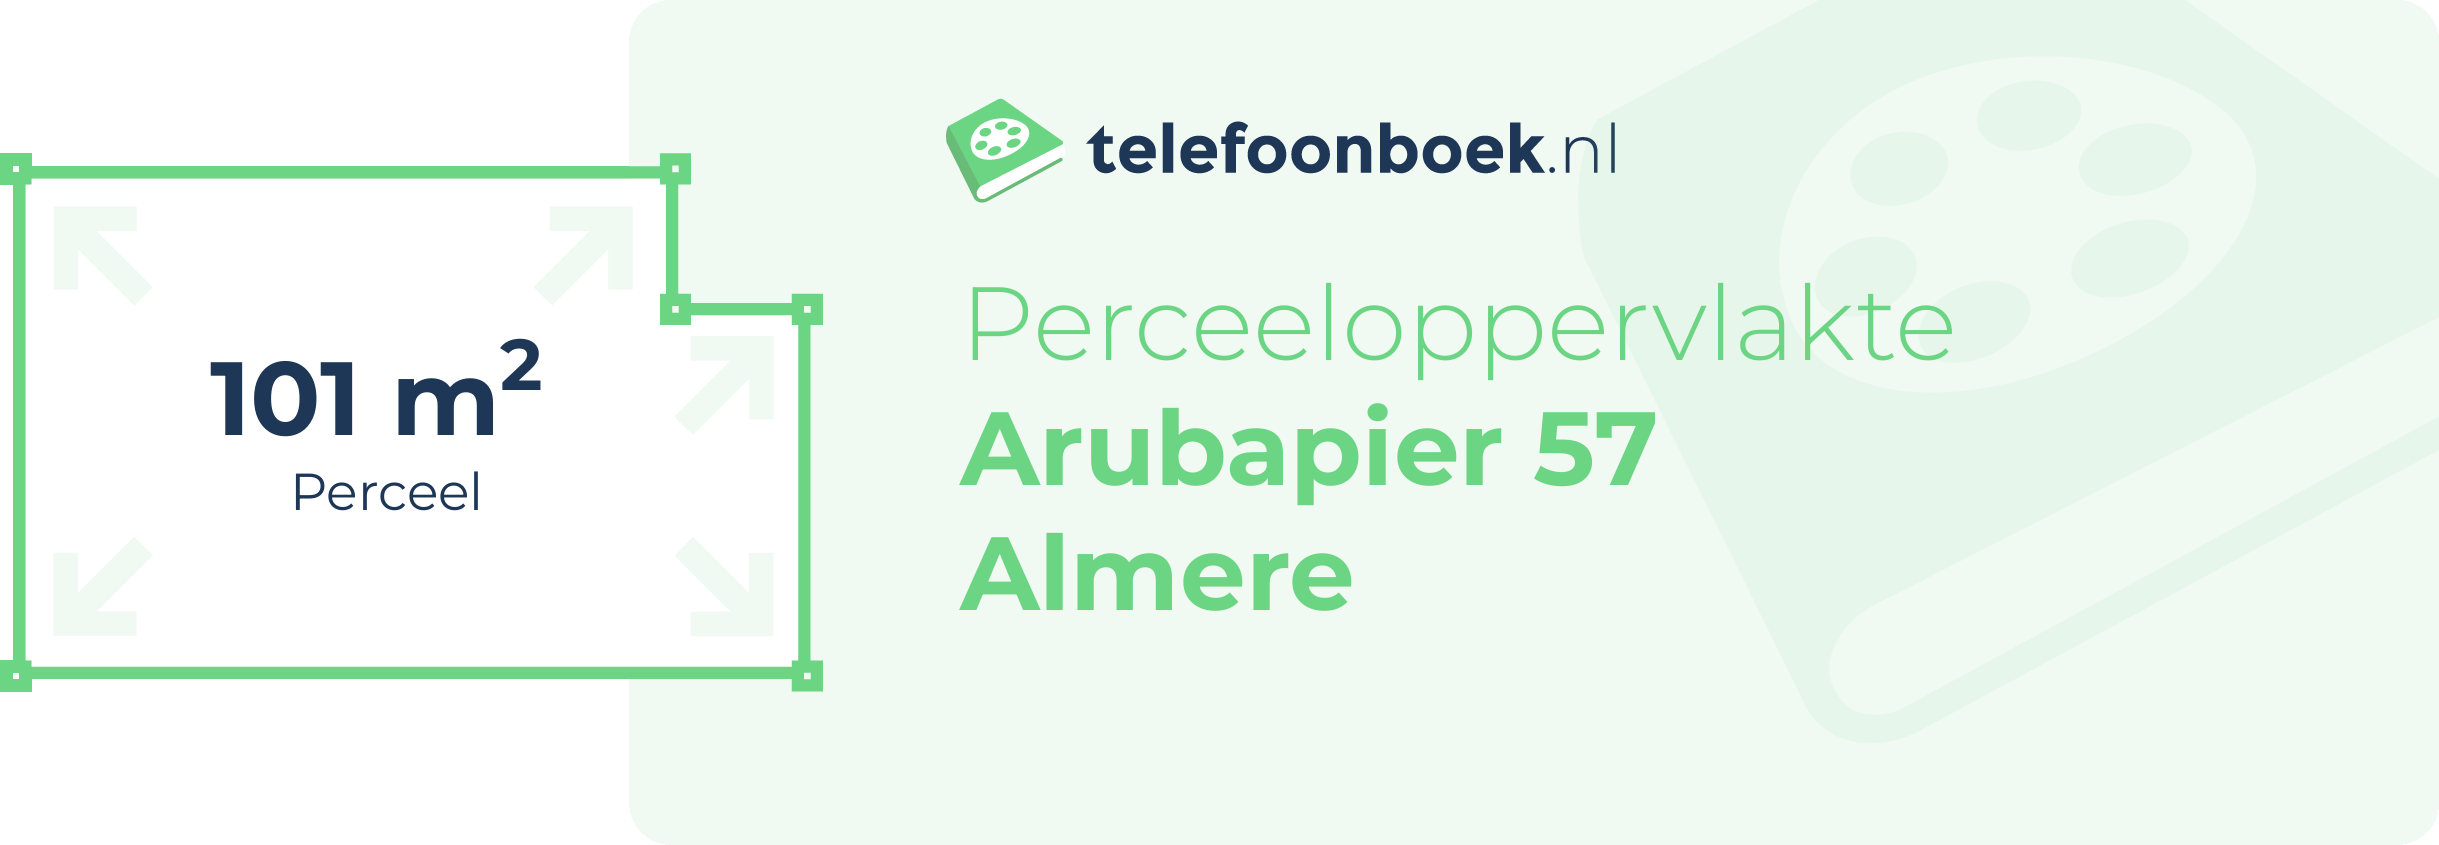 Perceeloppervlakte Arubapier 57 Almere